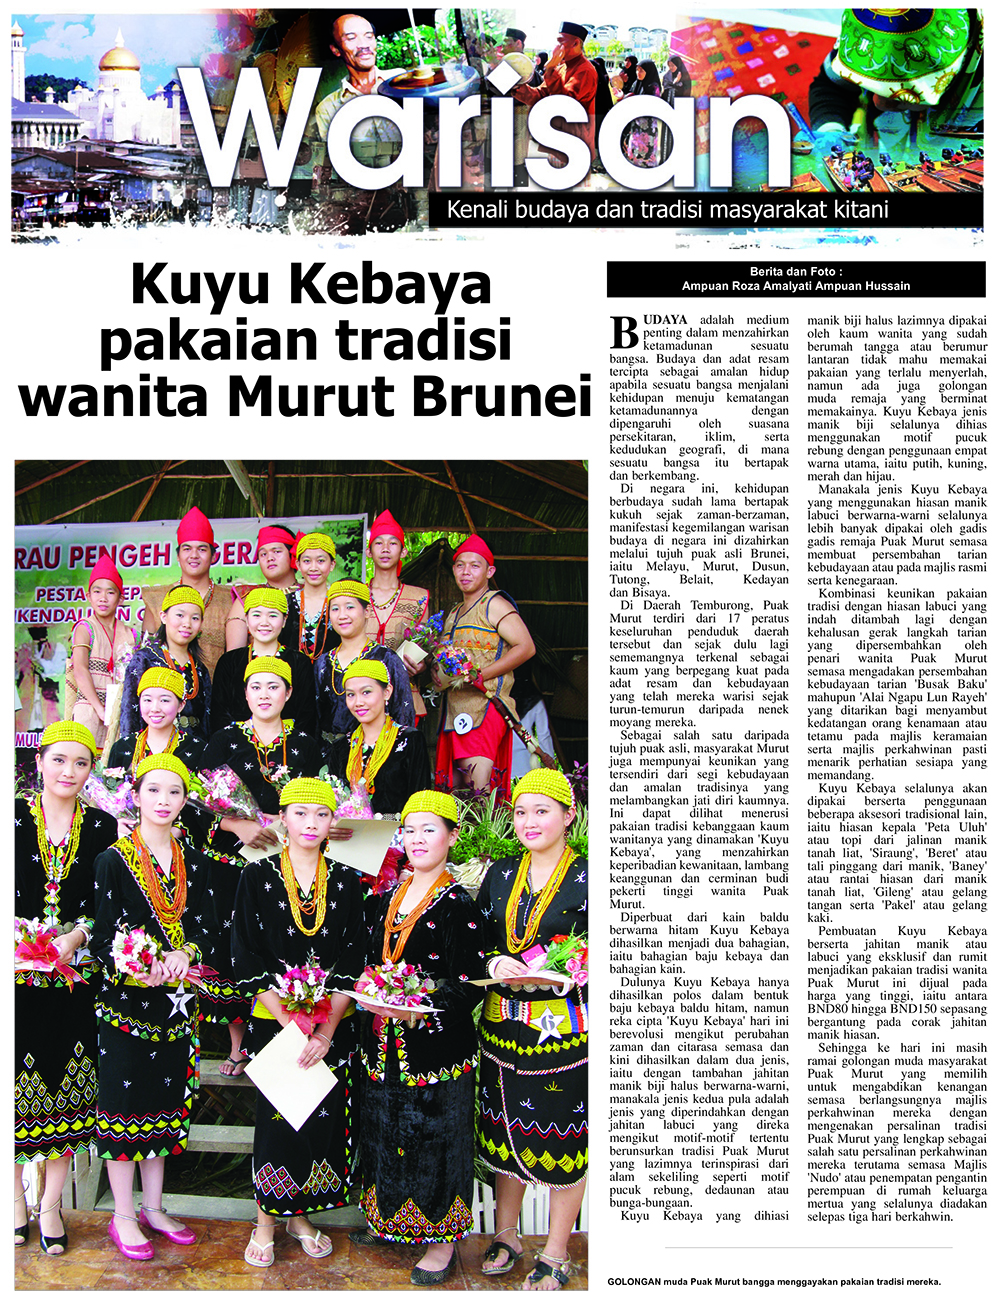 Warisan_Kuyu Kebaya pakaian tradisi wanita Murut Brunei.jpg